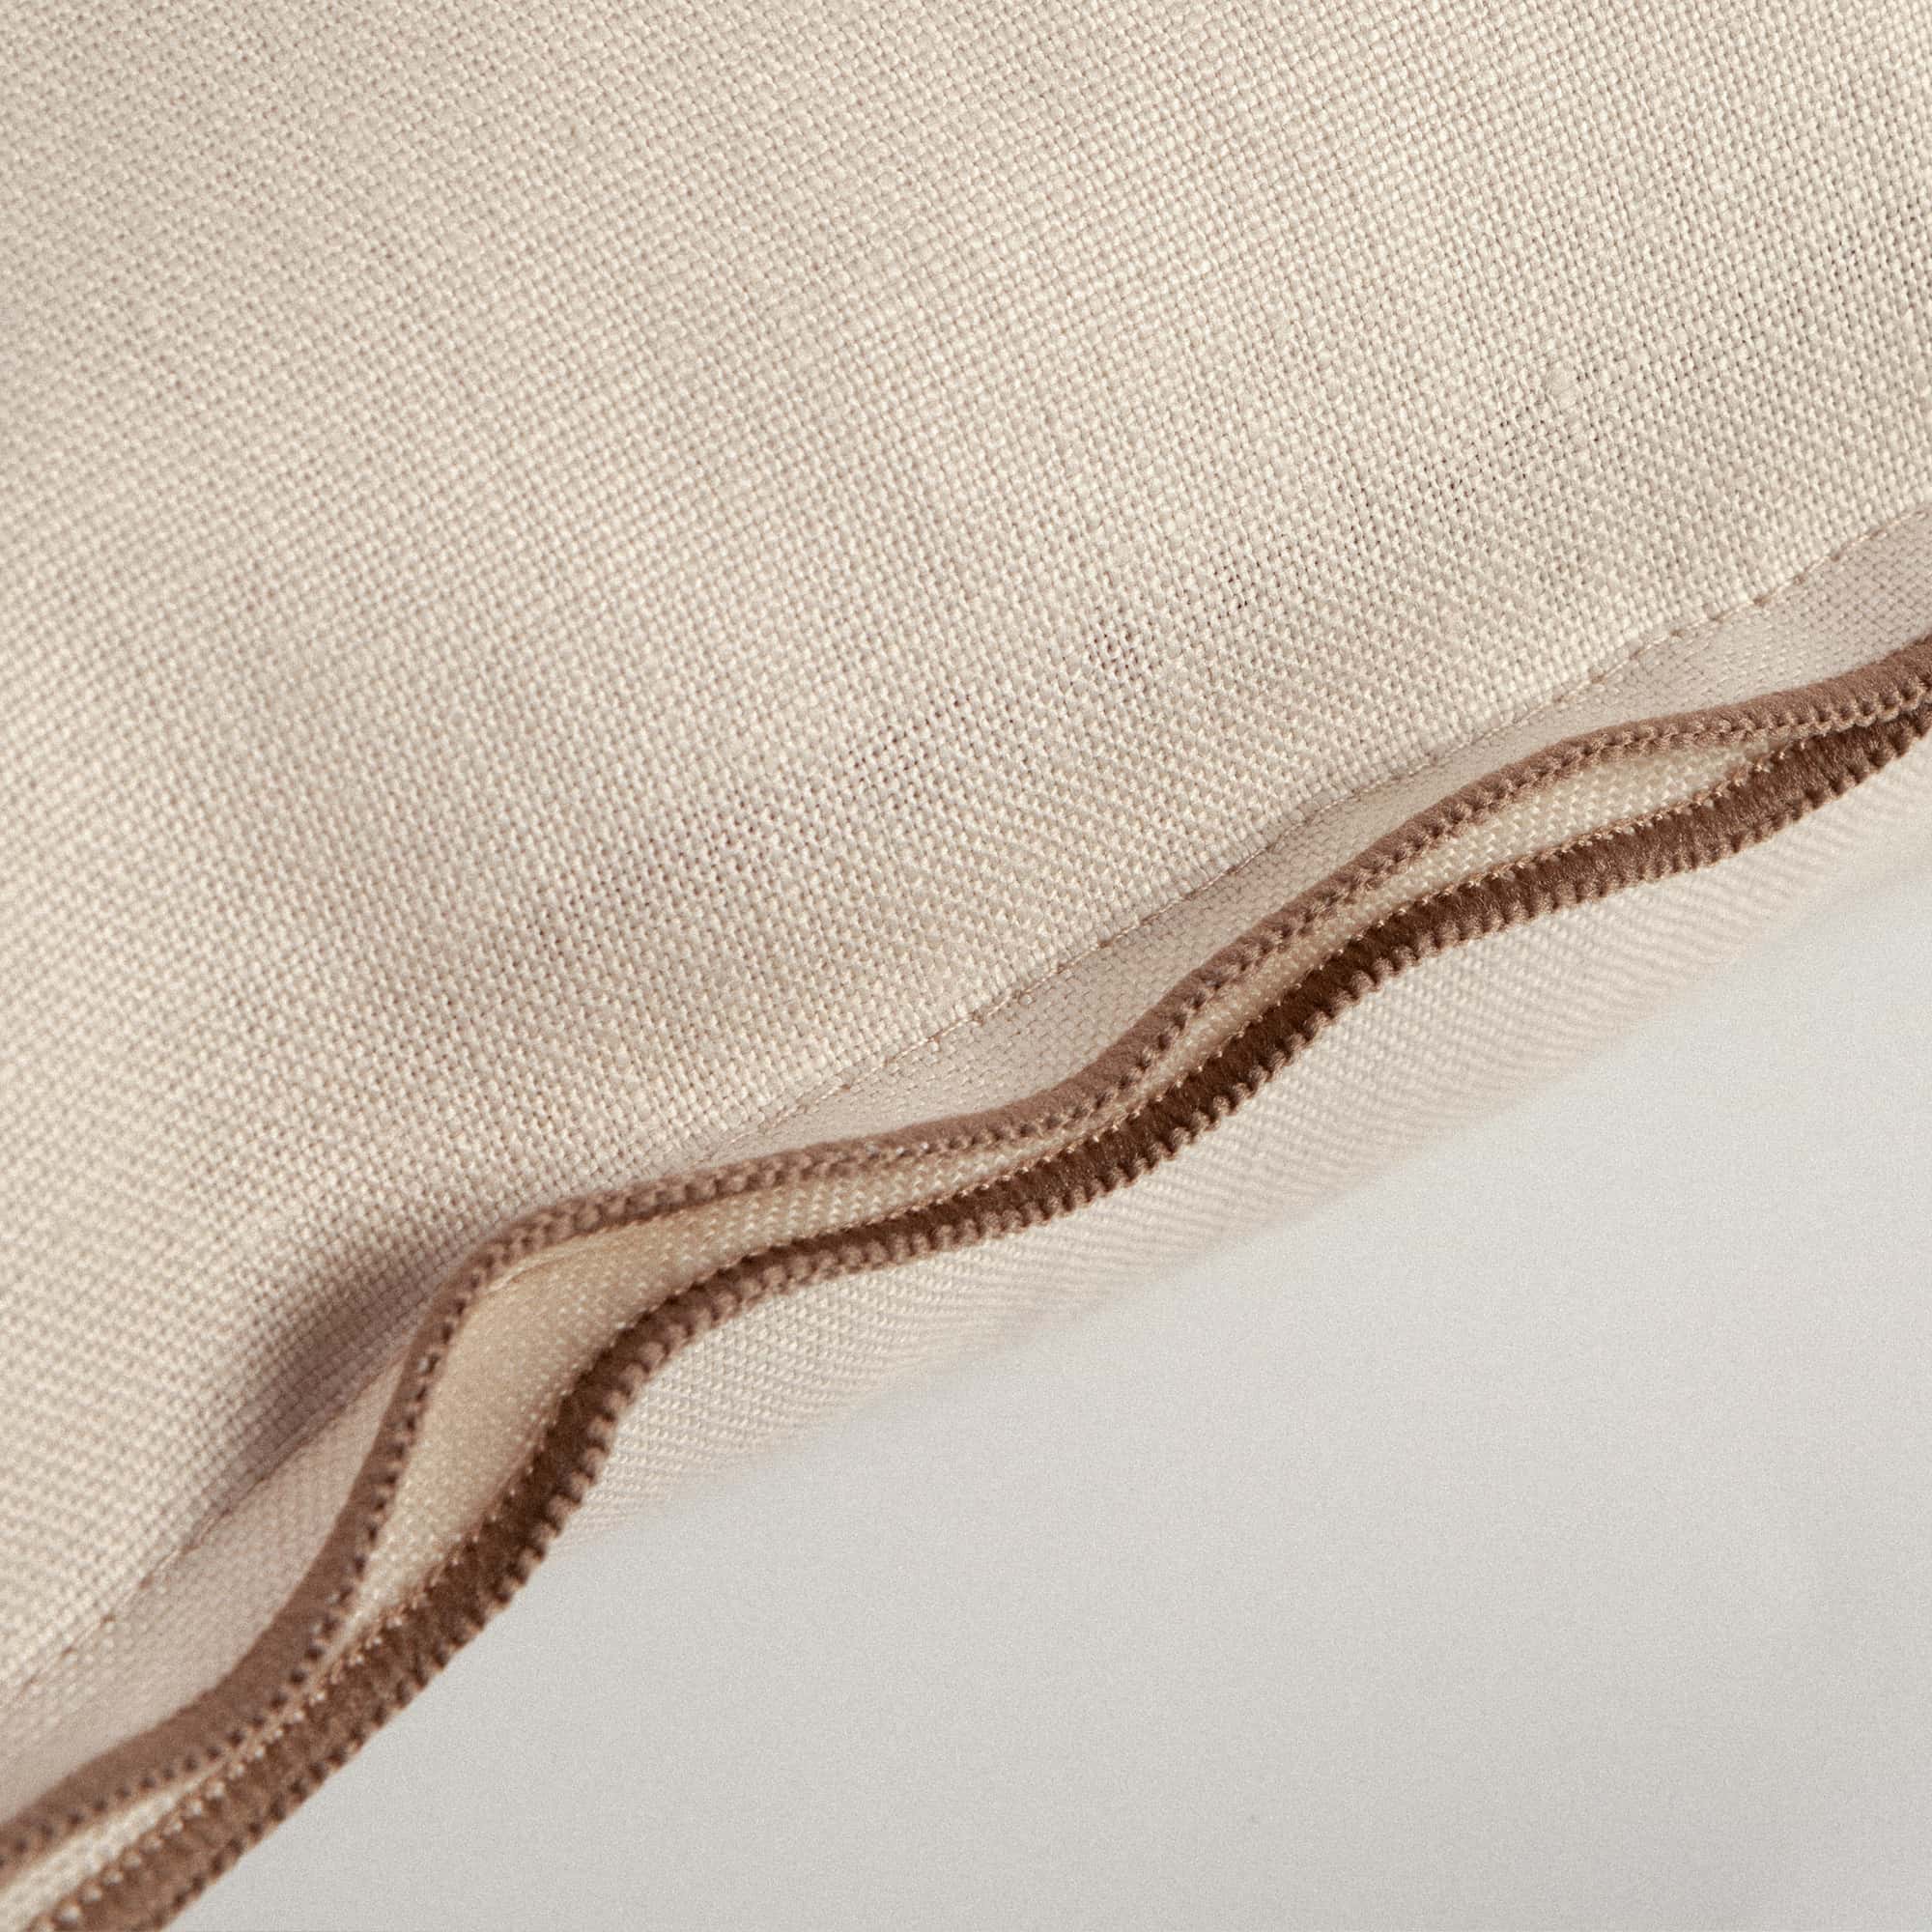 Decorative Linen Cushion Cover